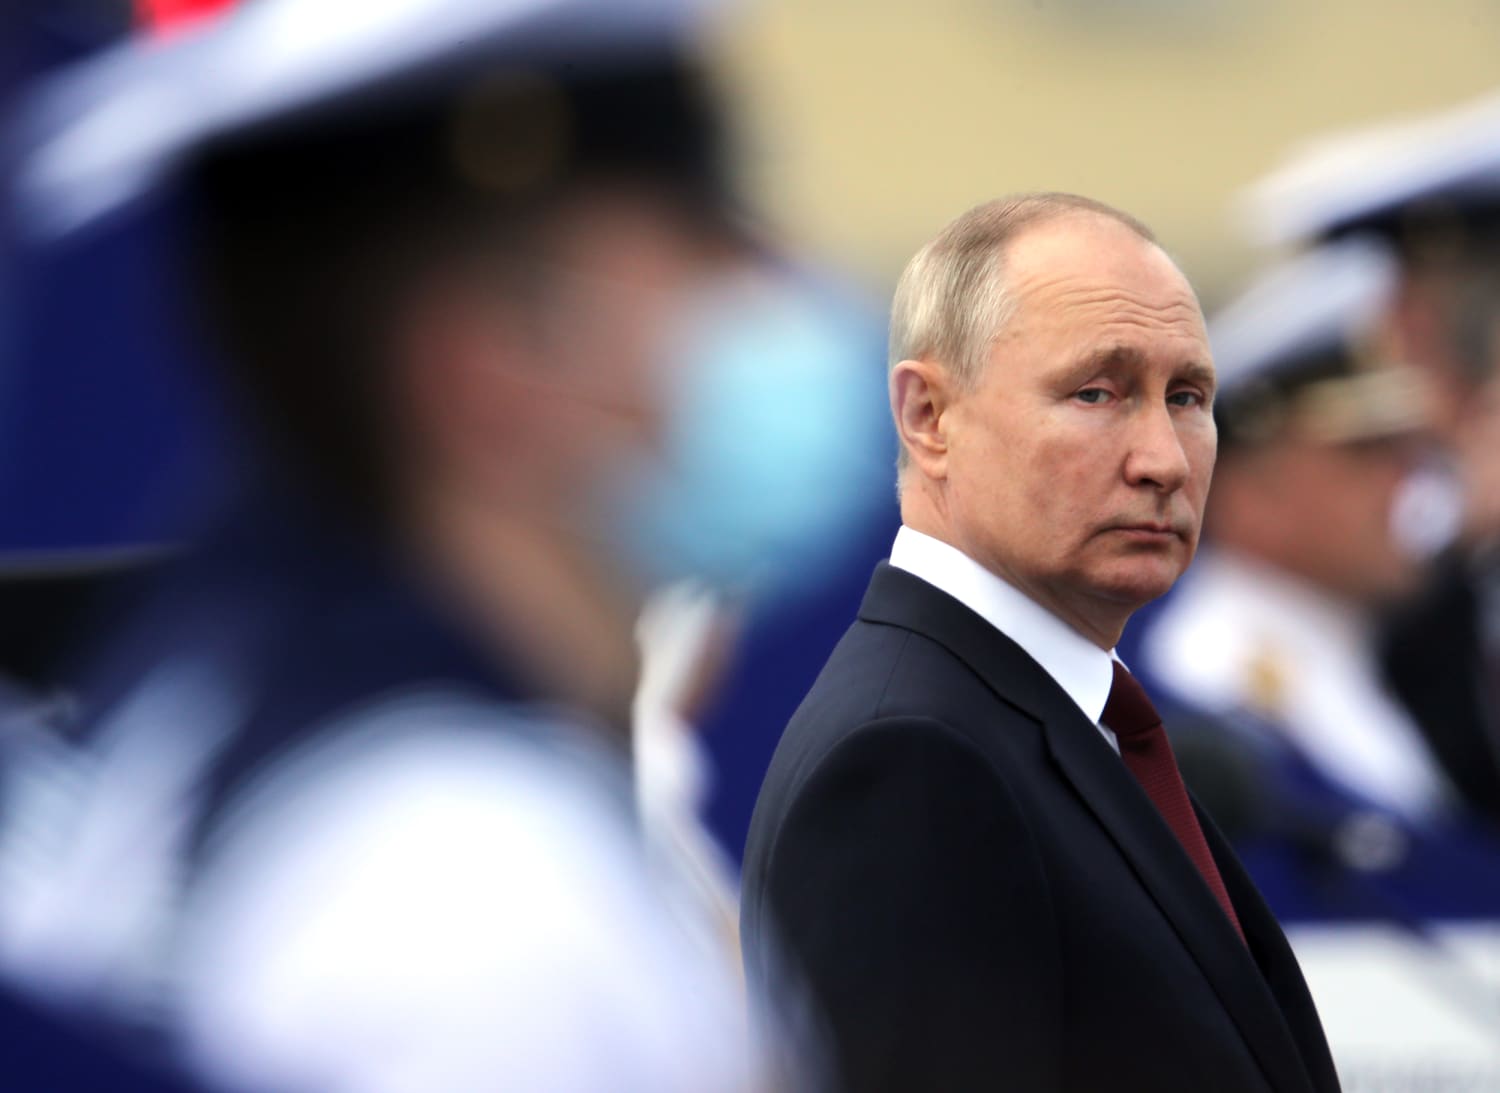 International Criminal Court issues arrest warrant for Putin over alleged Ukraine war crimes